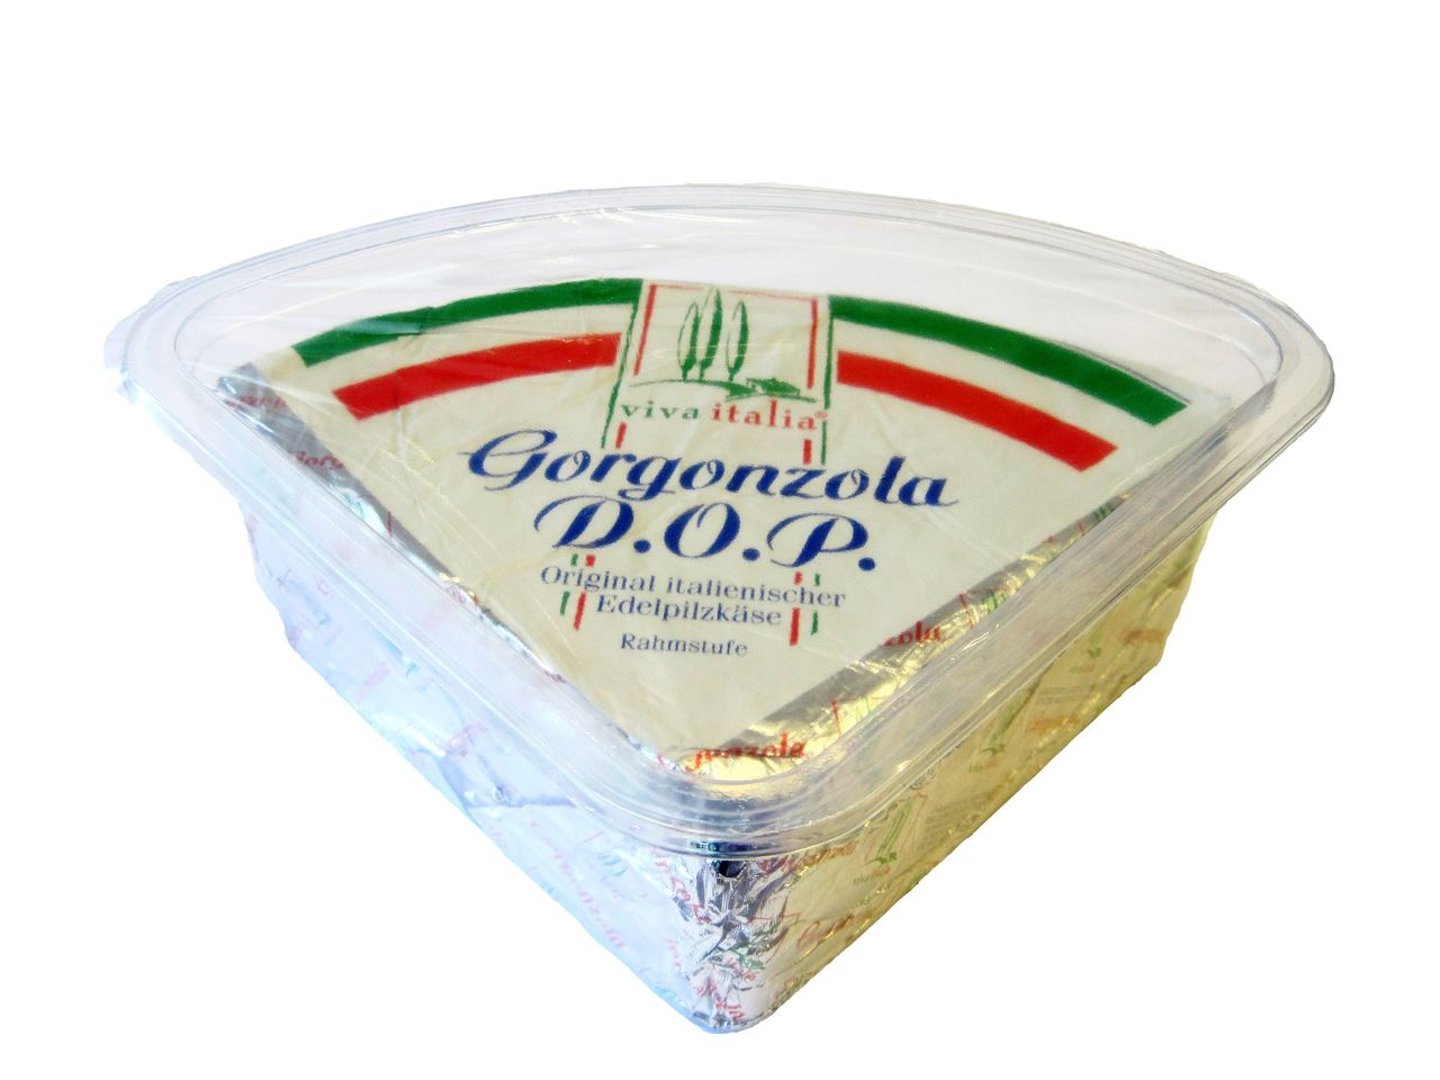 viva italia - Gorgonzola norditalienischer Blauschimmelkäse, mild, 1/4 Laib, 48 % Fett ca. 1,5 kg